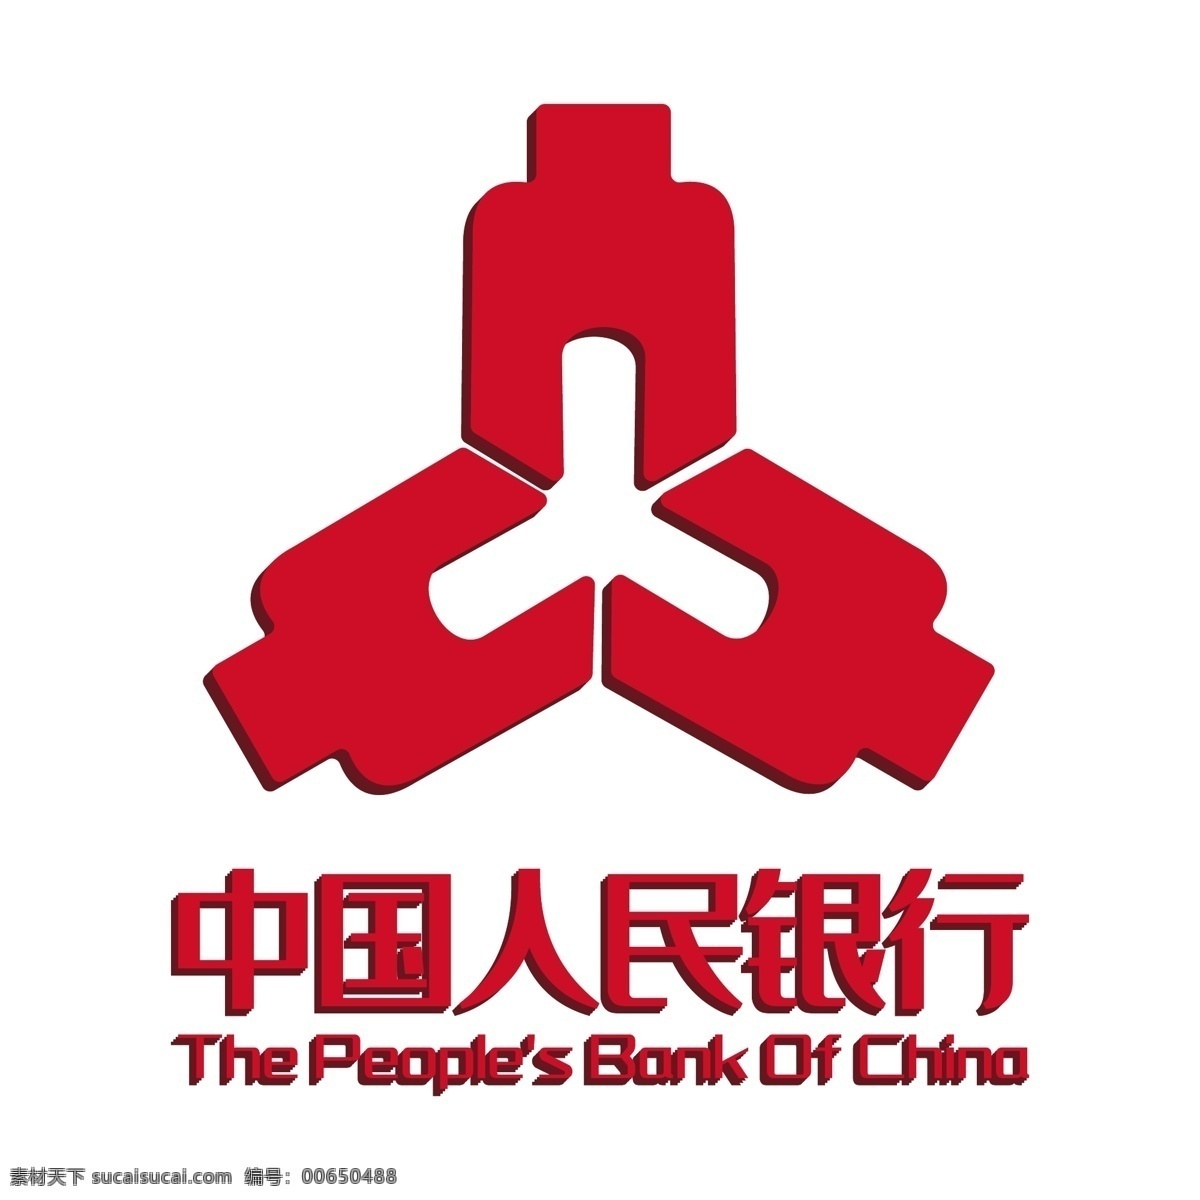 d 中国人民银行 手机 applogo 图标 红色 银行logo 金融机构 货币信贷 矢量银行 手机app 免抠图png 千库原创